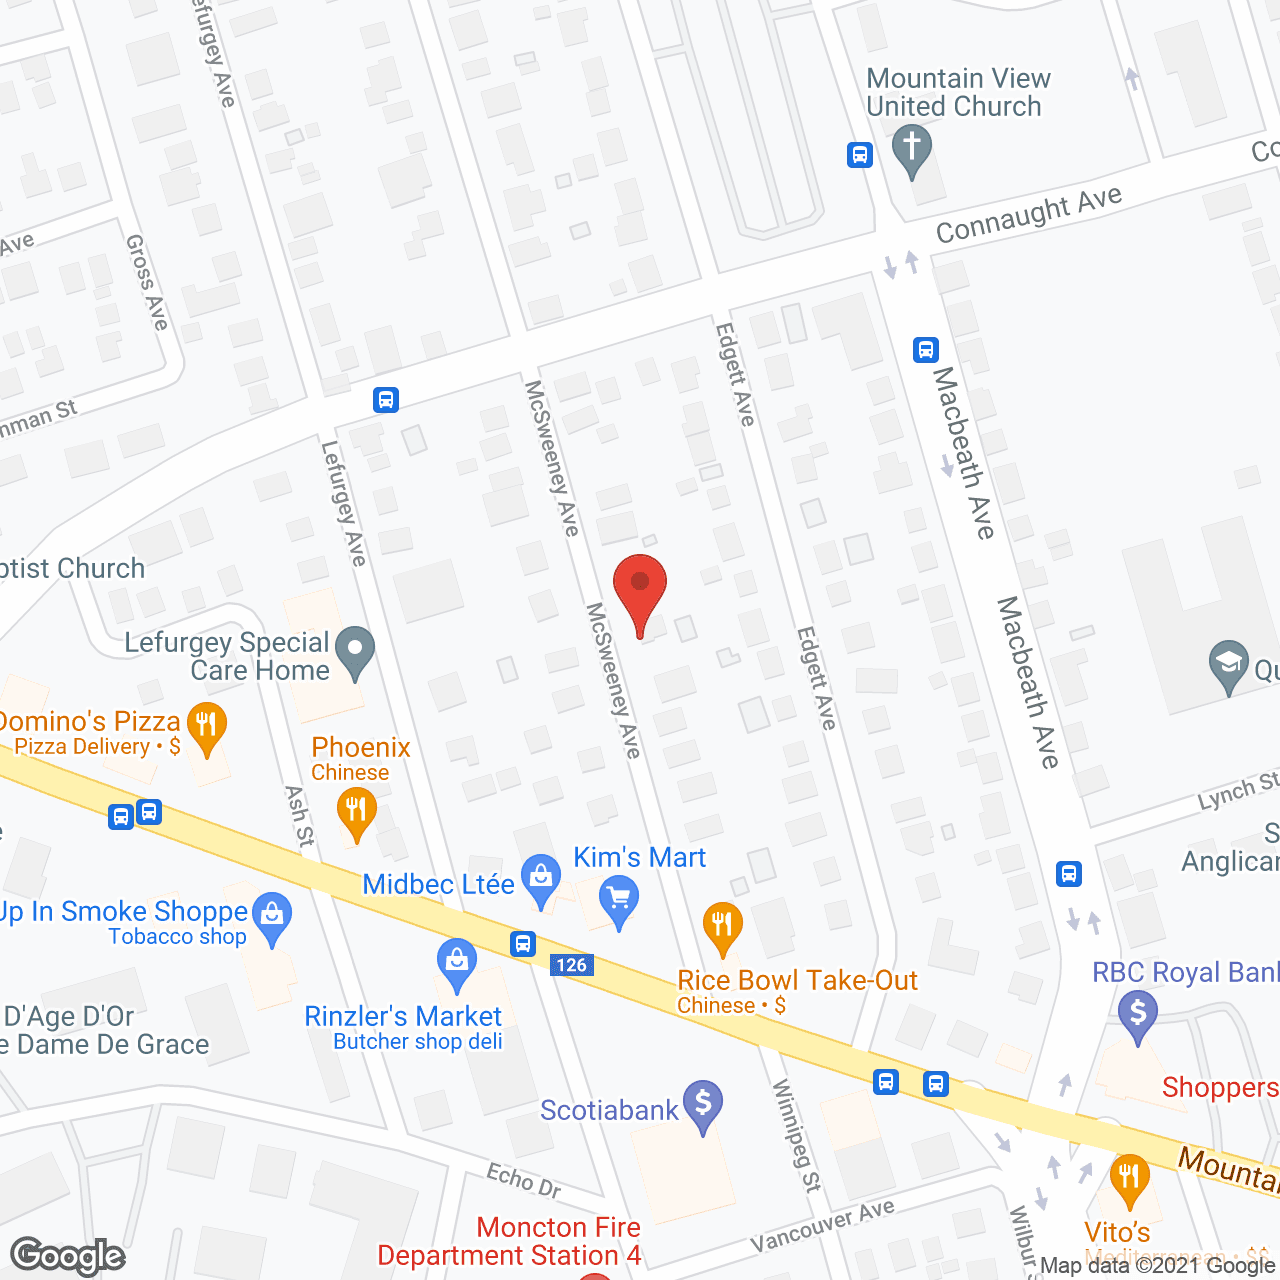 Sunset Village in google map